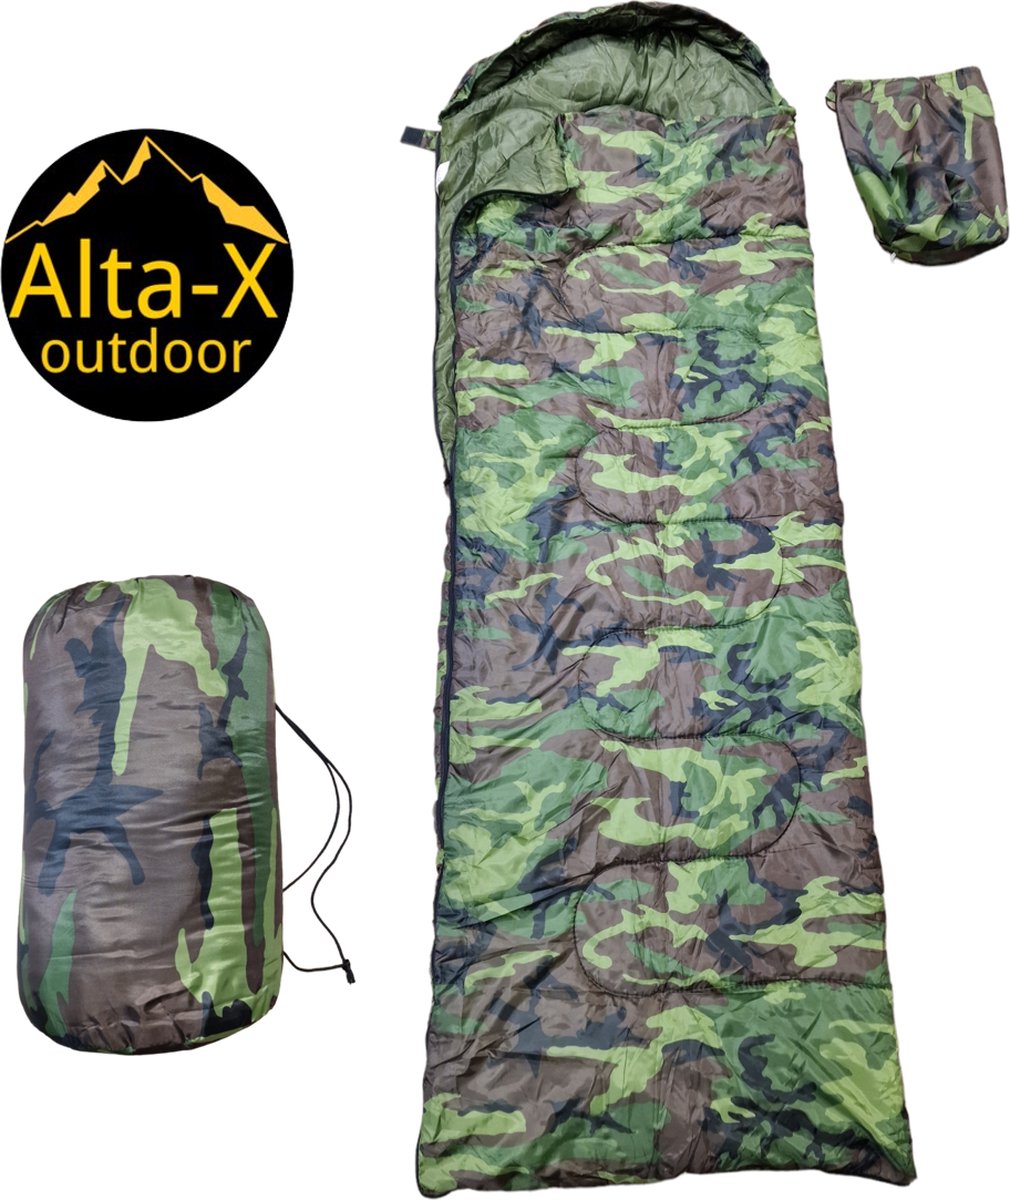 Alta-X Leger slaapzak in Camo kleur. Materiaal: 100% polyester. De leger slaapzak is waterafstotend